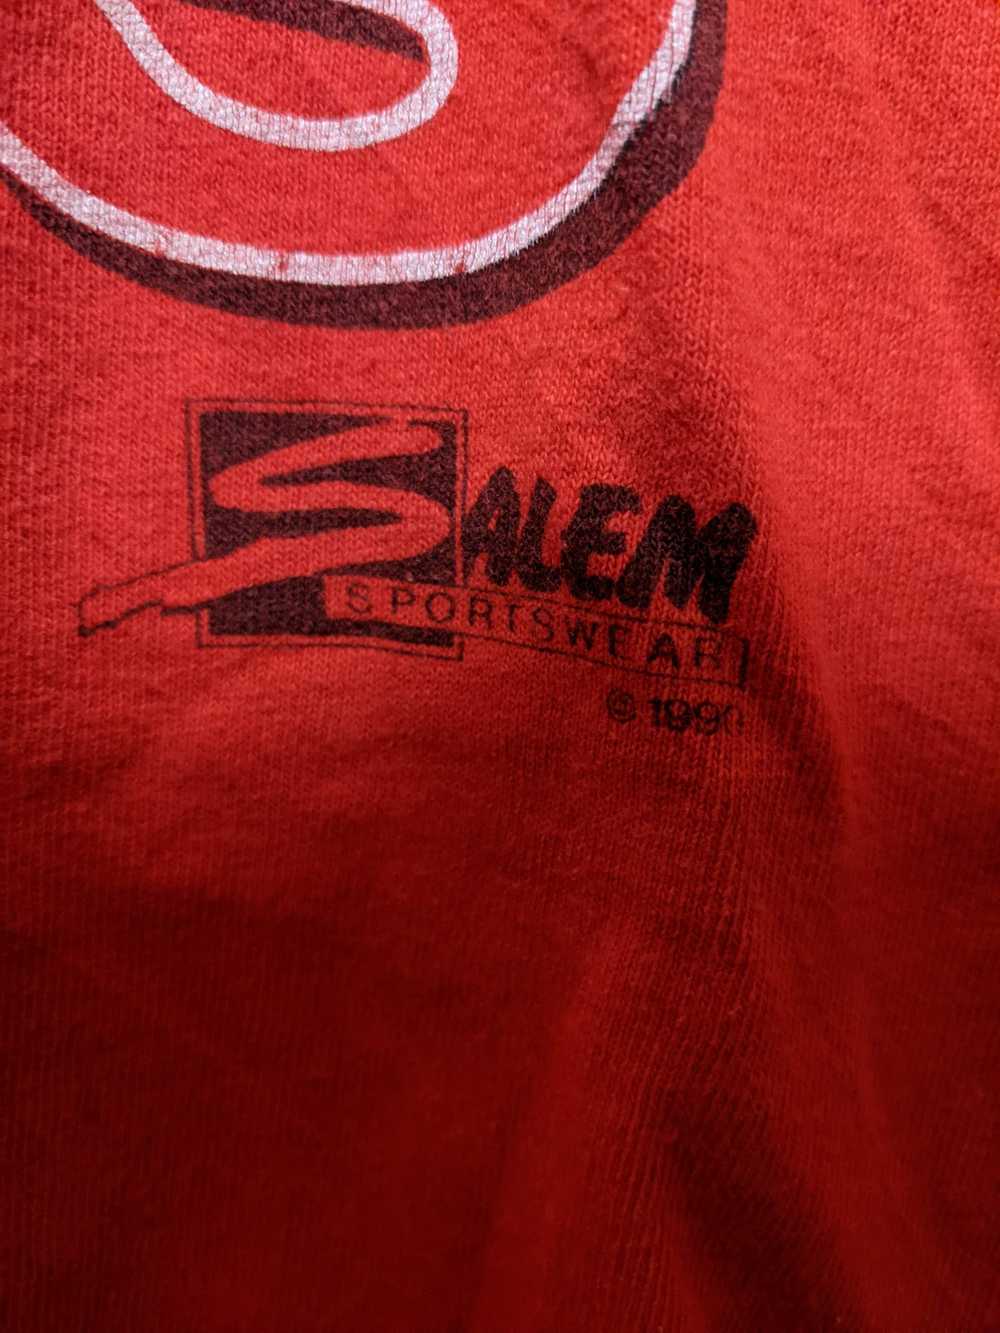 1990 Salem Chicago Bulls Shirt - image 3